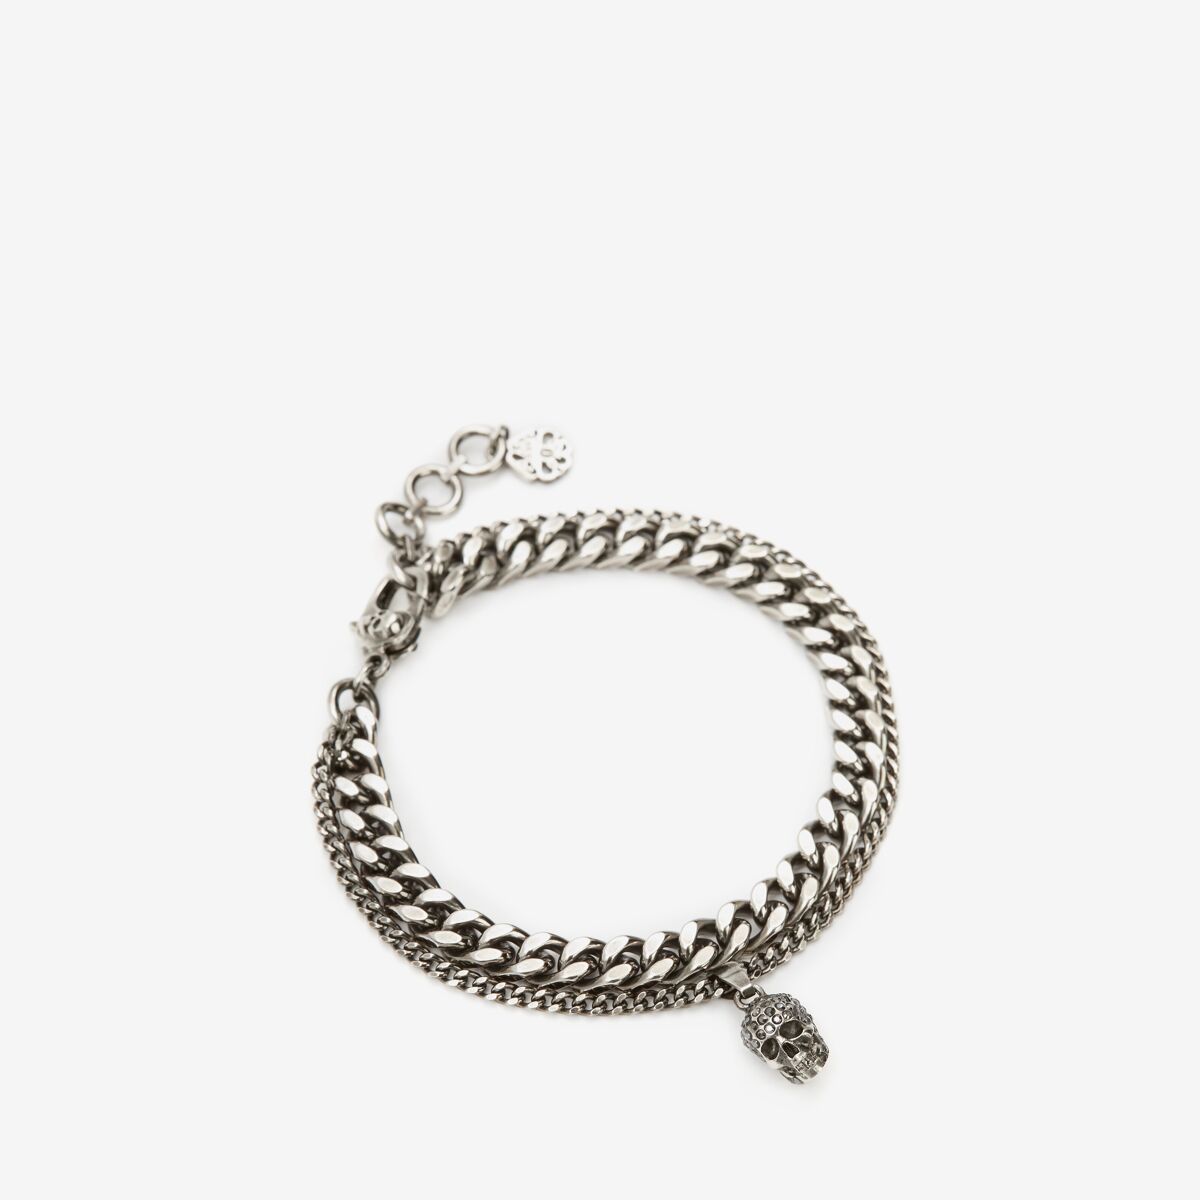 ALEXANDER MCQUEEN - Pave Skull Chain Bracelet - Item 689416I94VY1572